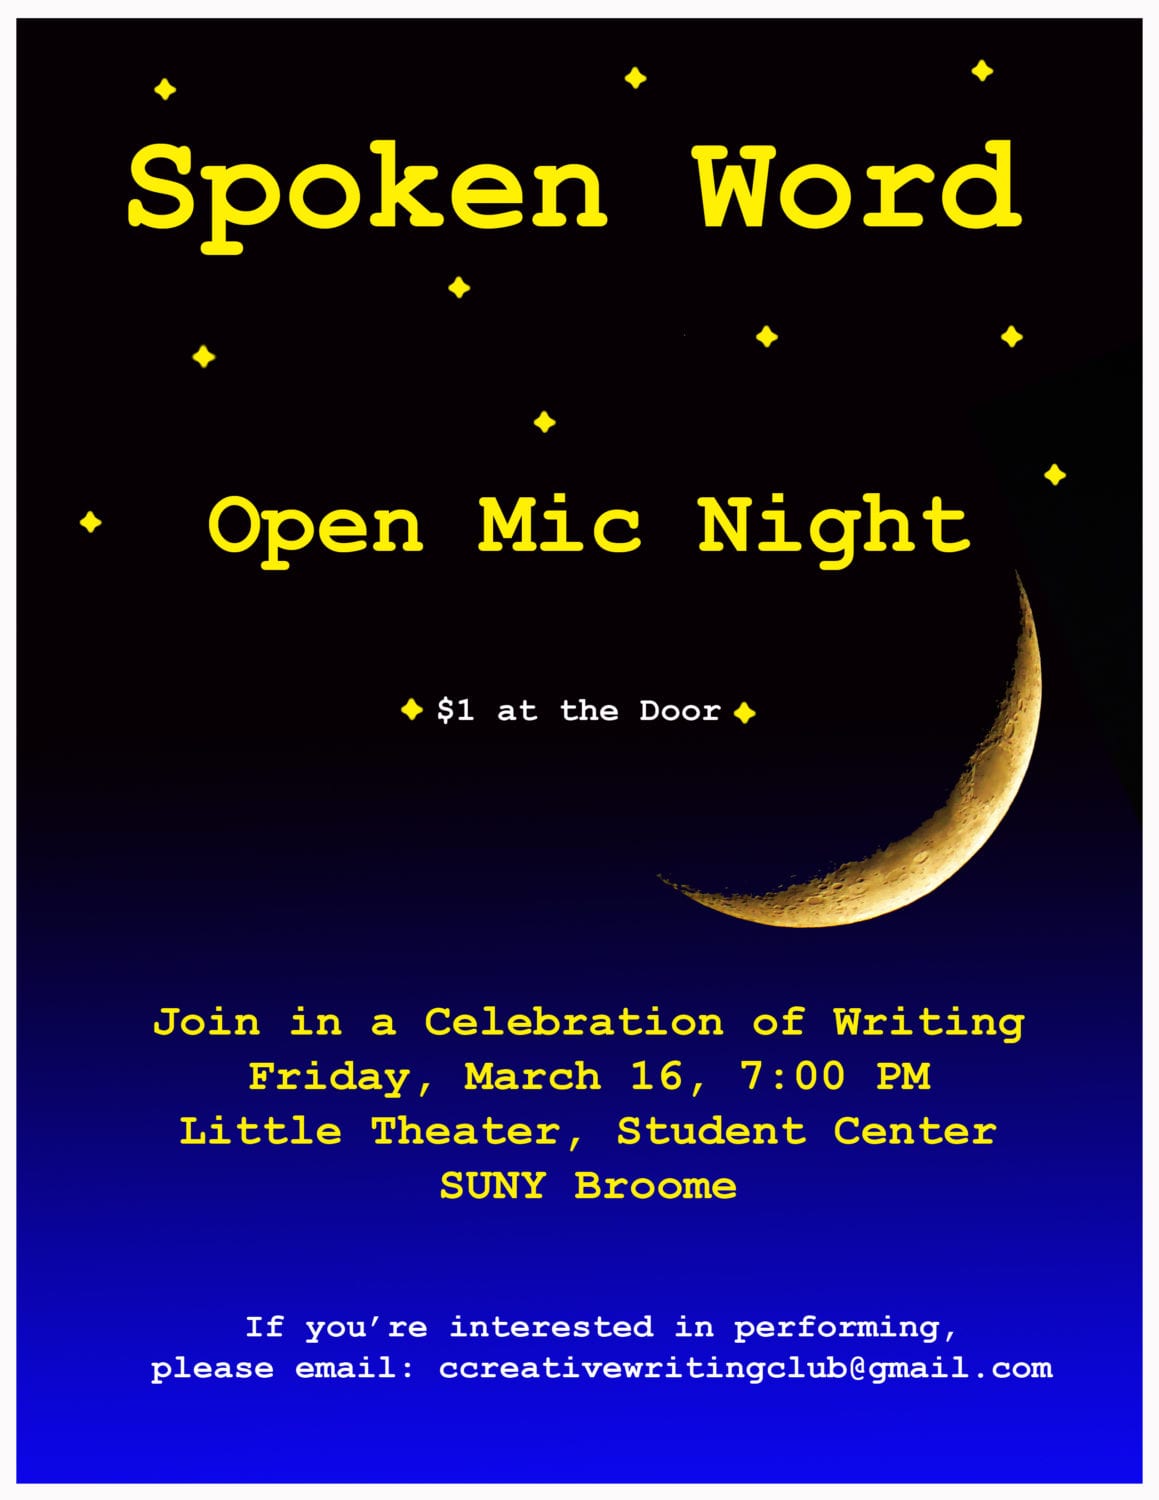 Get creative: Spoken Word Open Mic Night on March 16